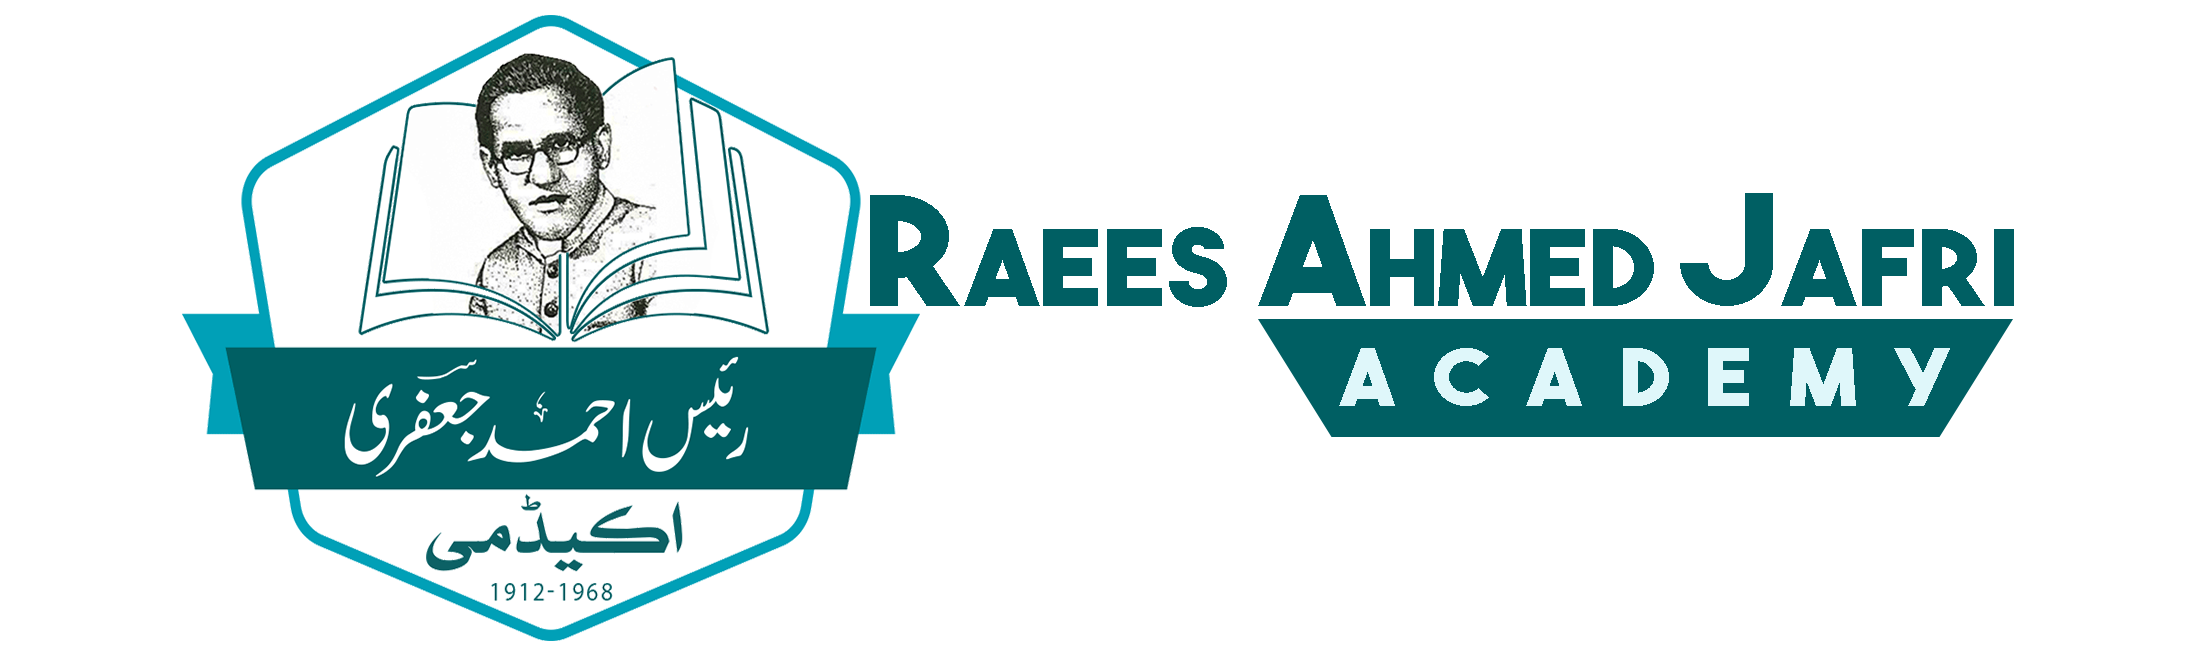 Raees Ahmed Jafri Academy